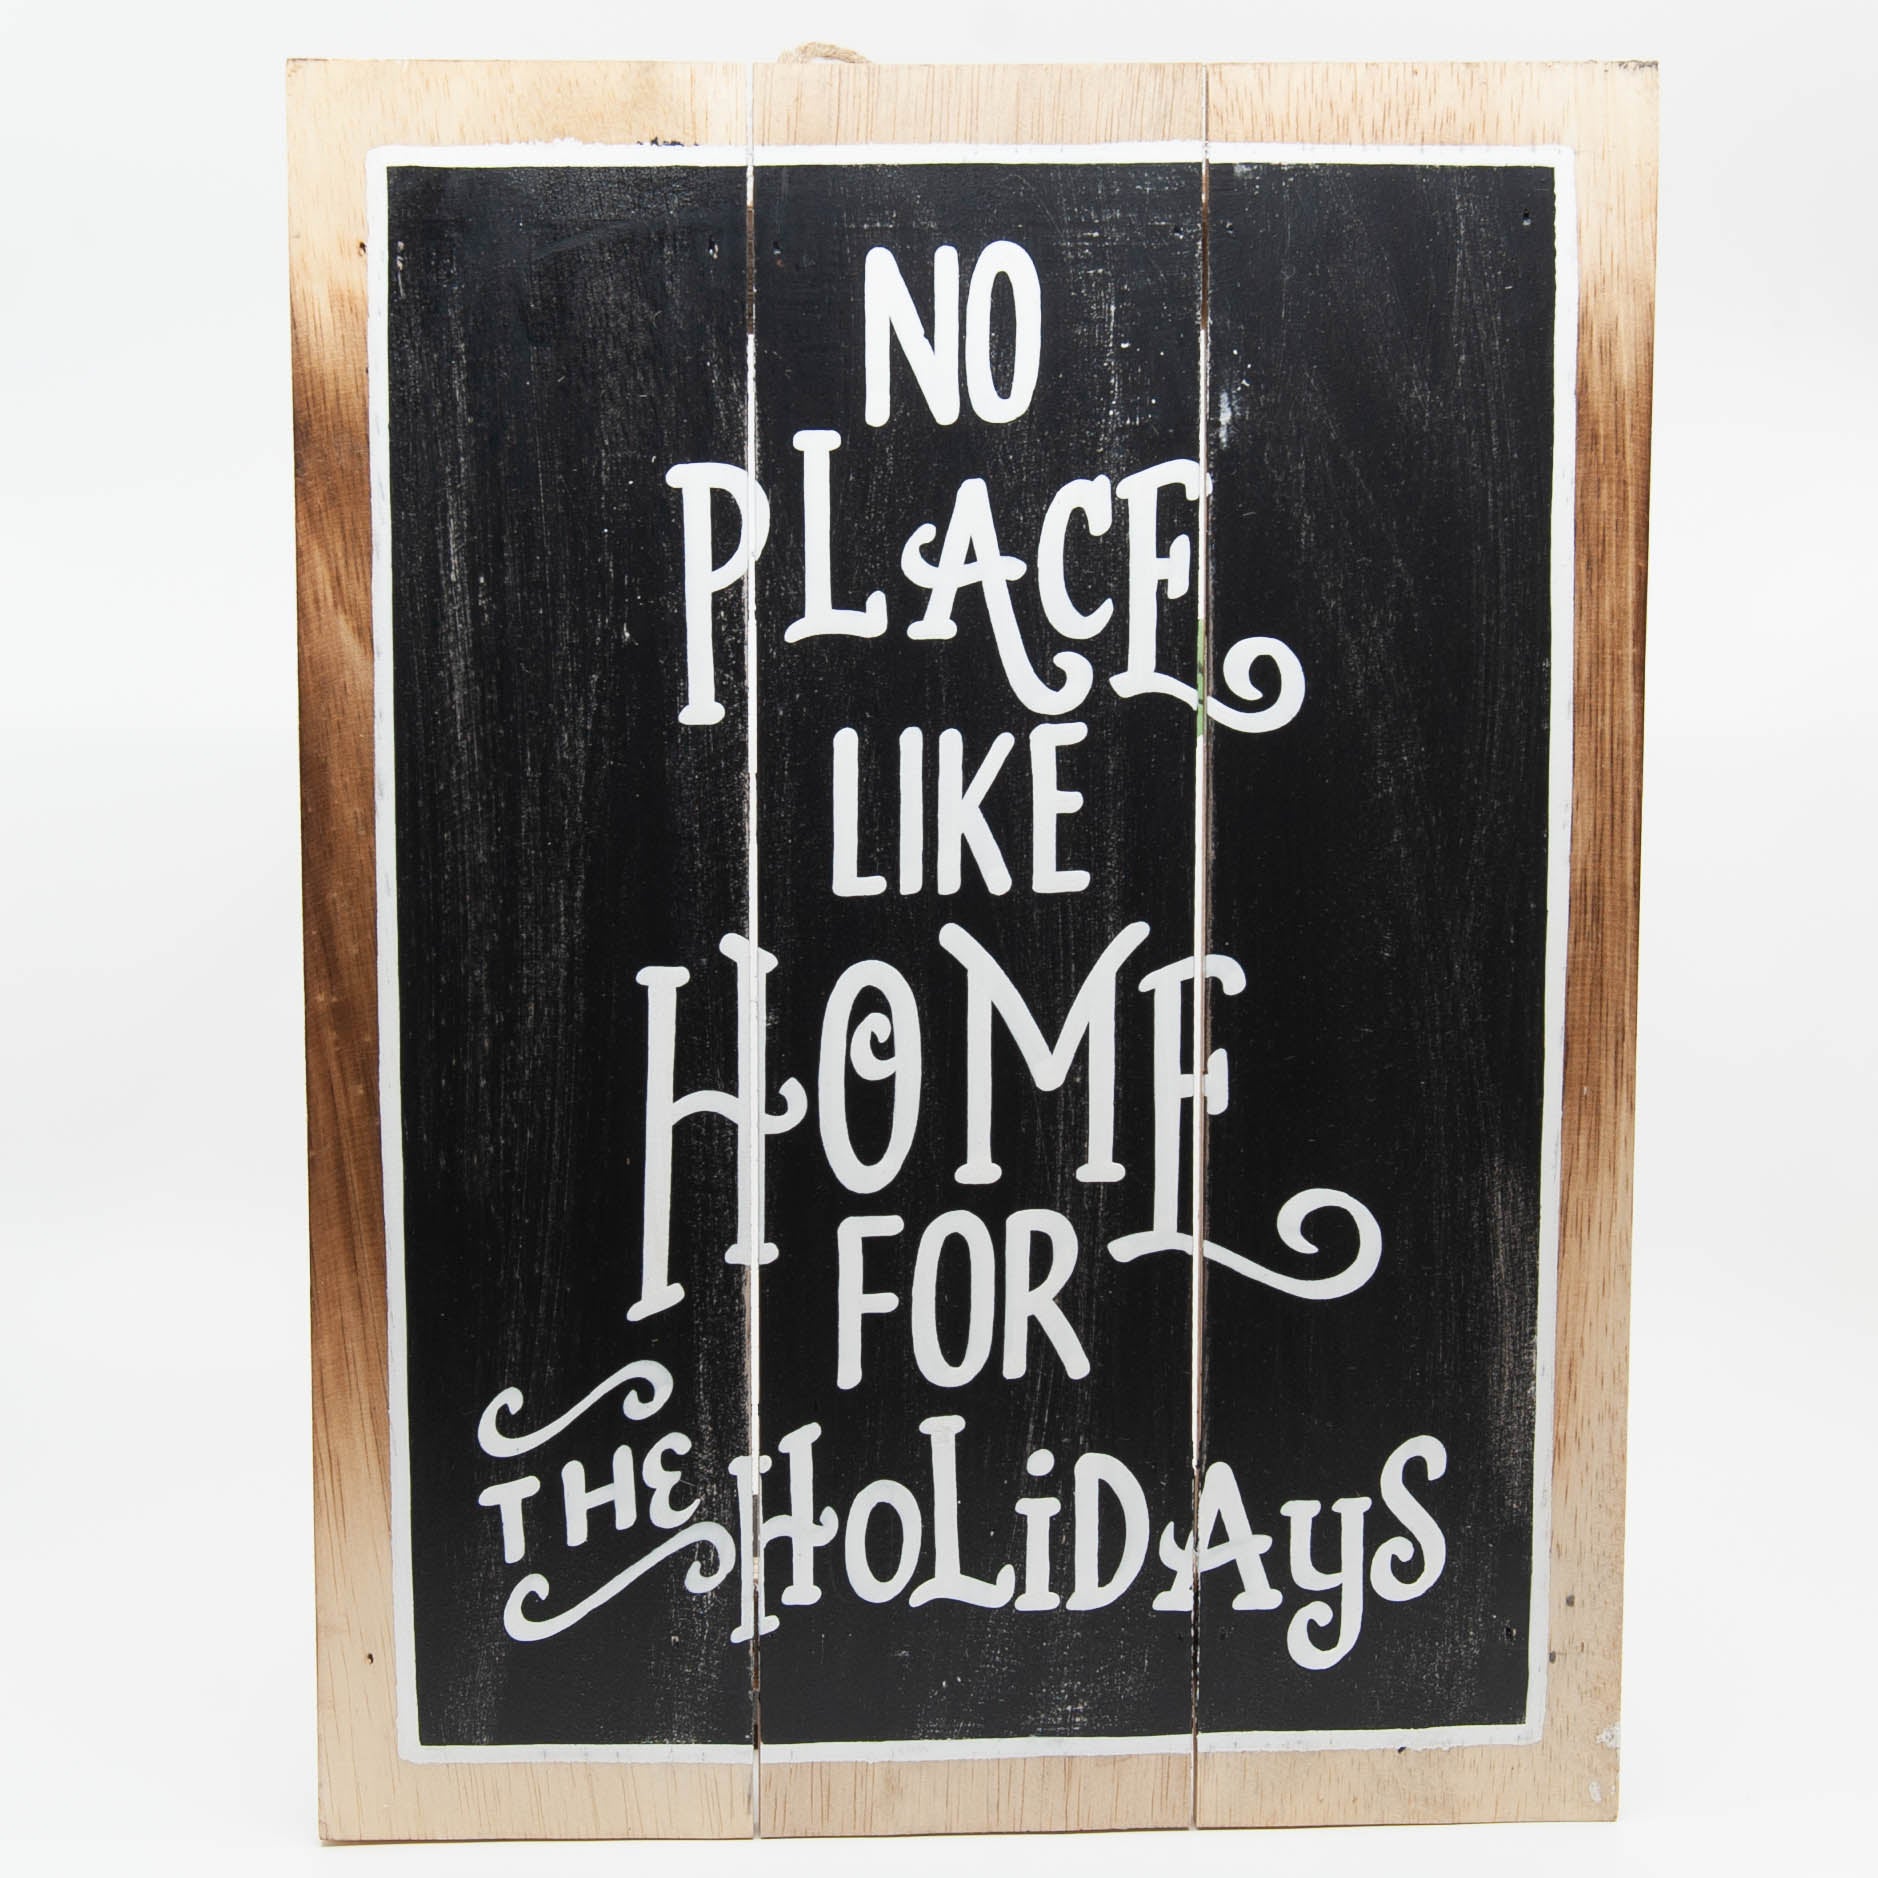 Panneau en bois "No Place Like Home for the Holidays"